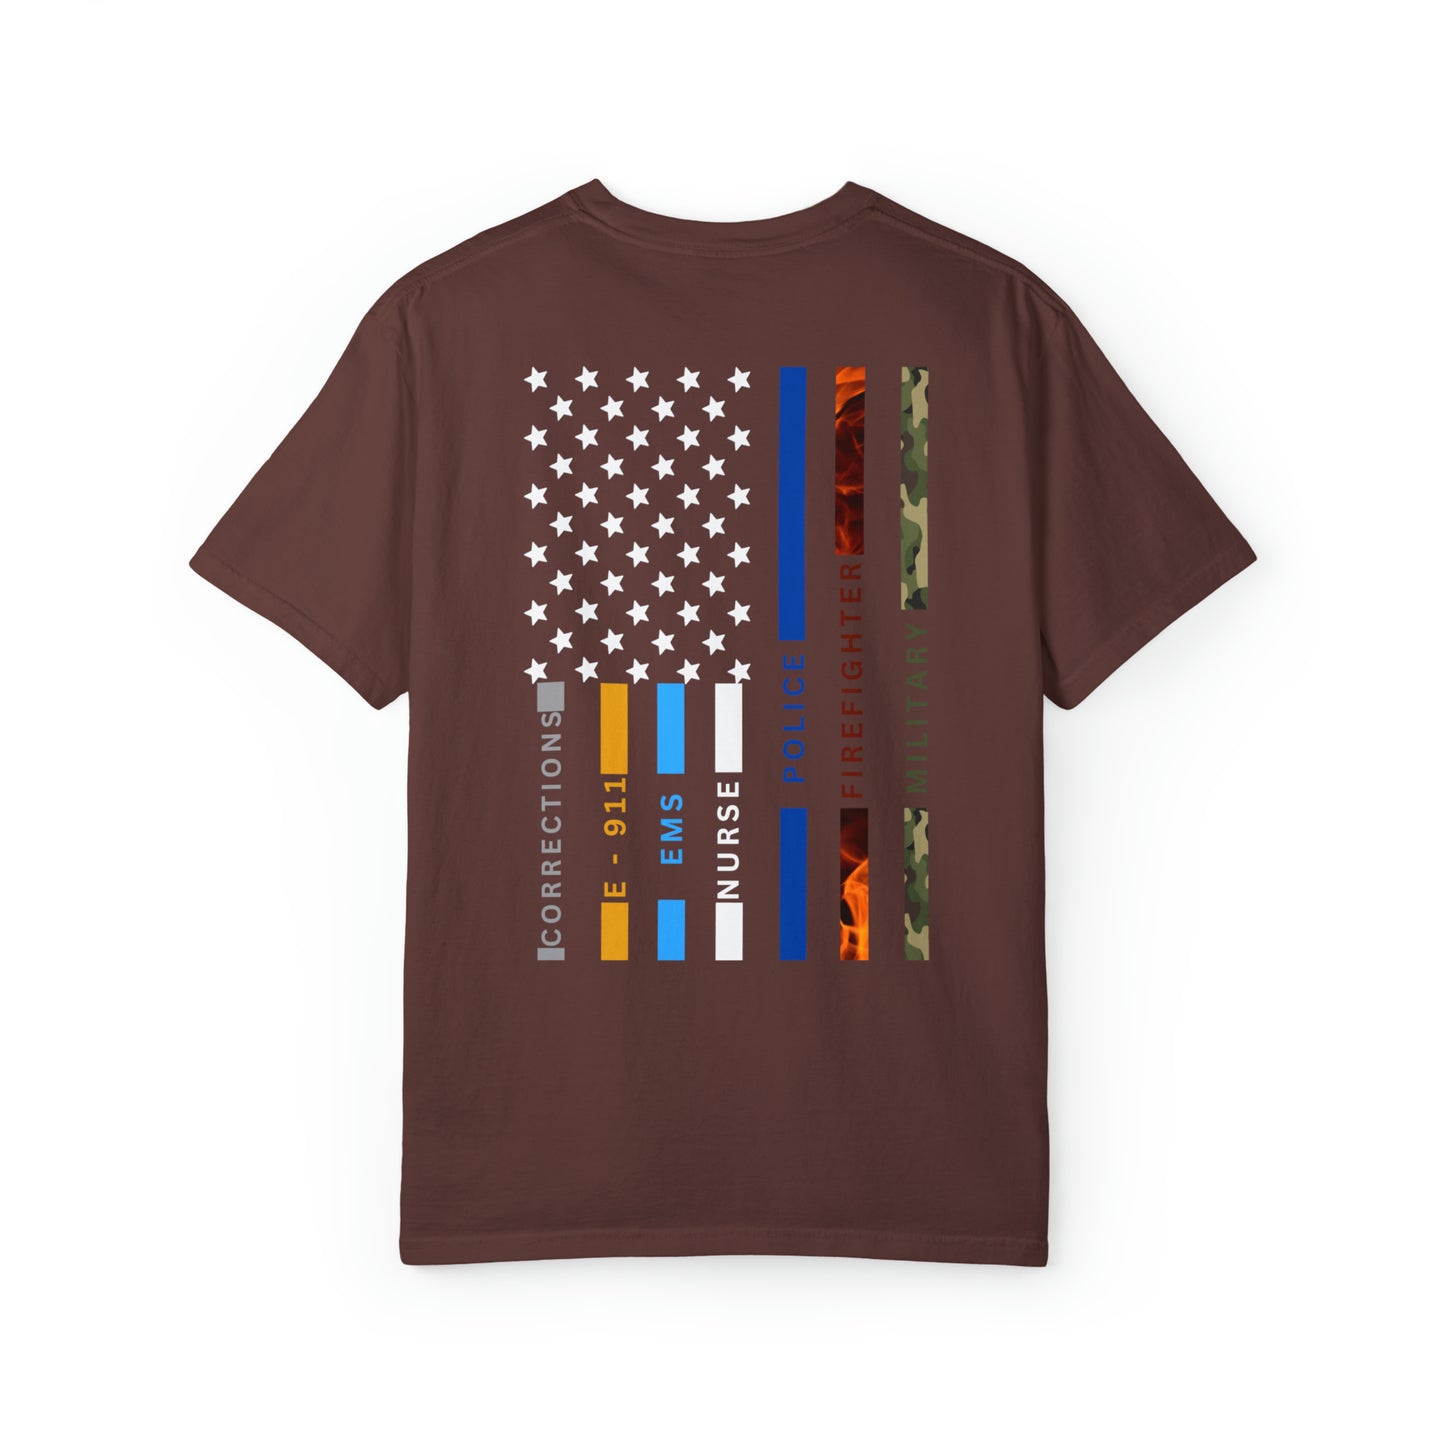 American Heroes Script Font T-Shirt